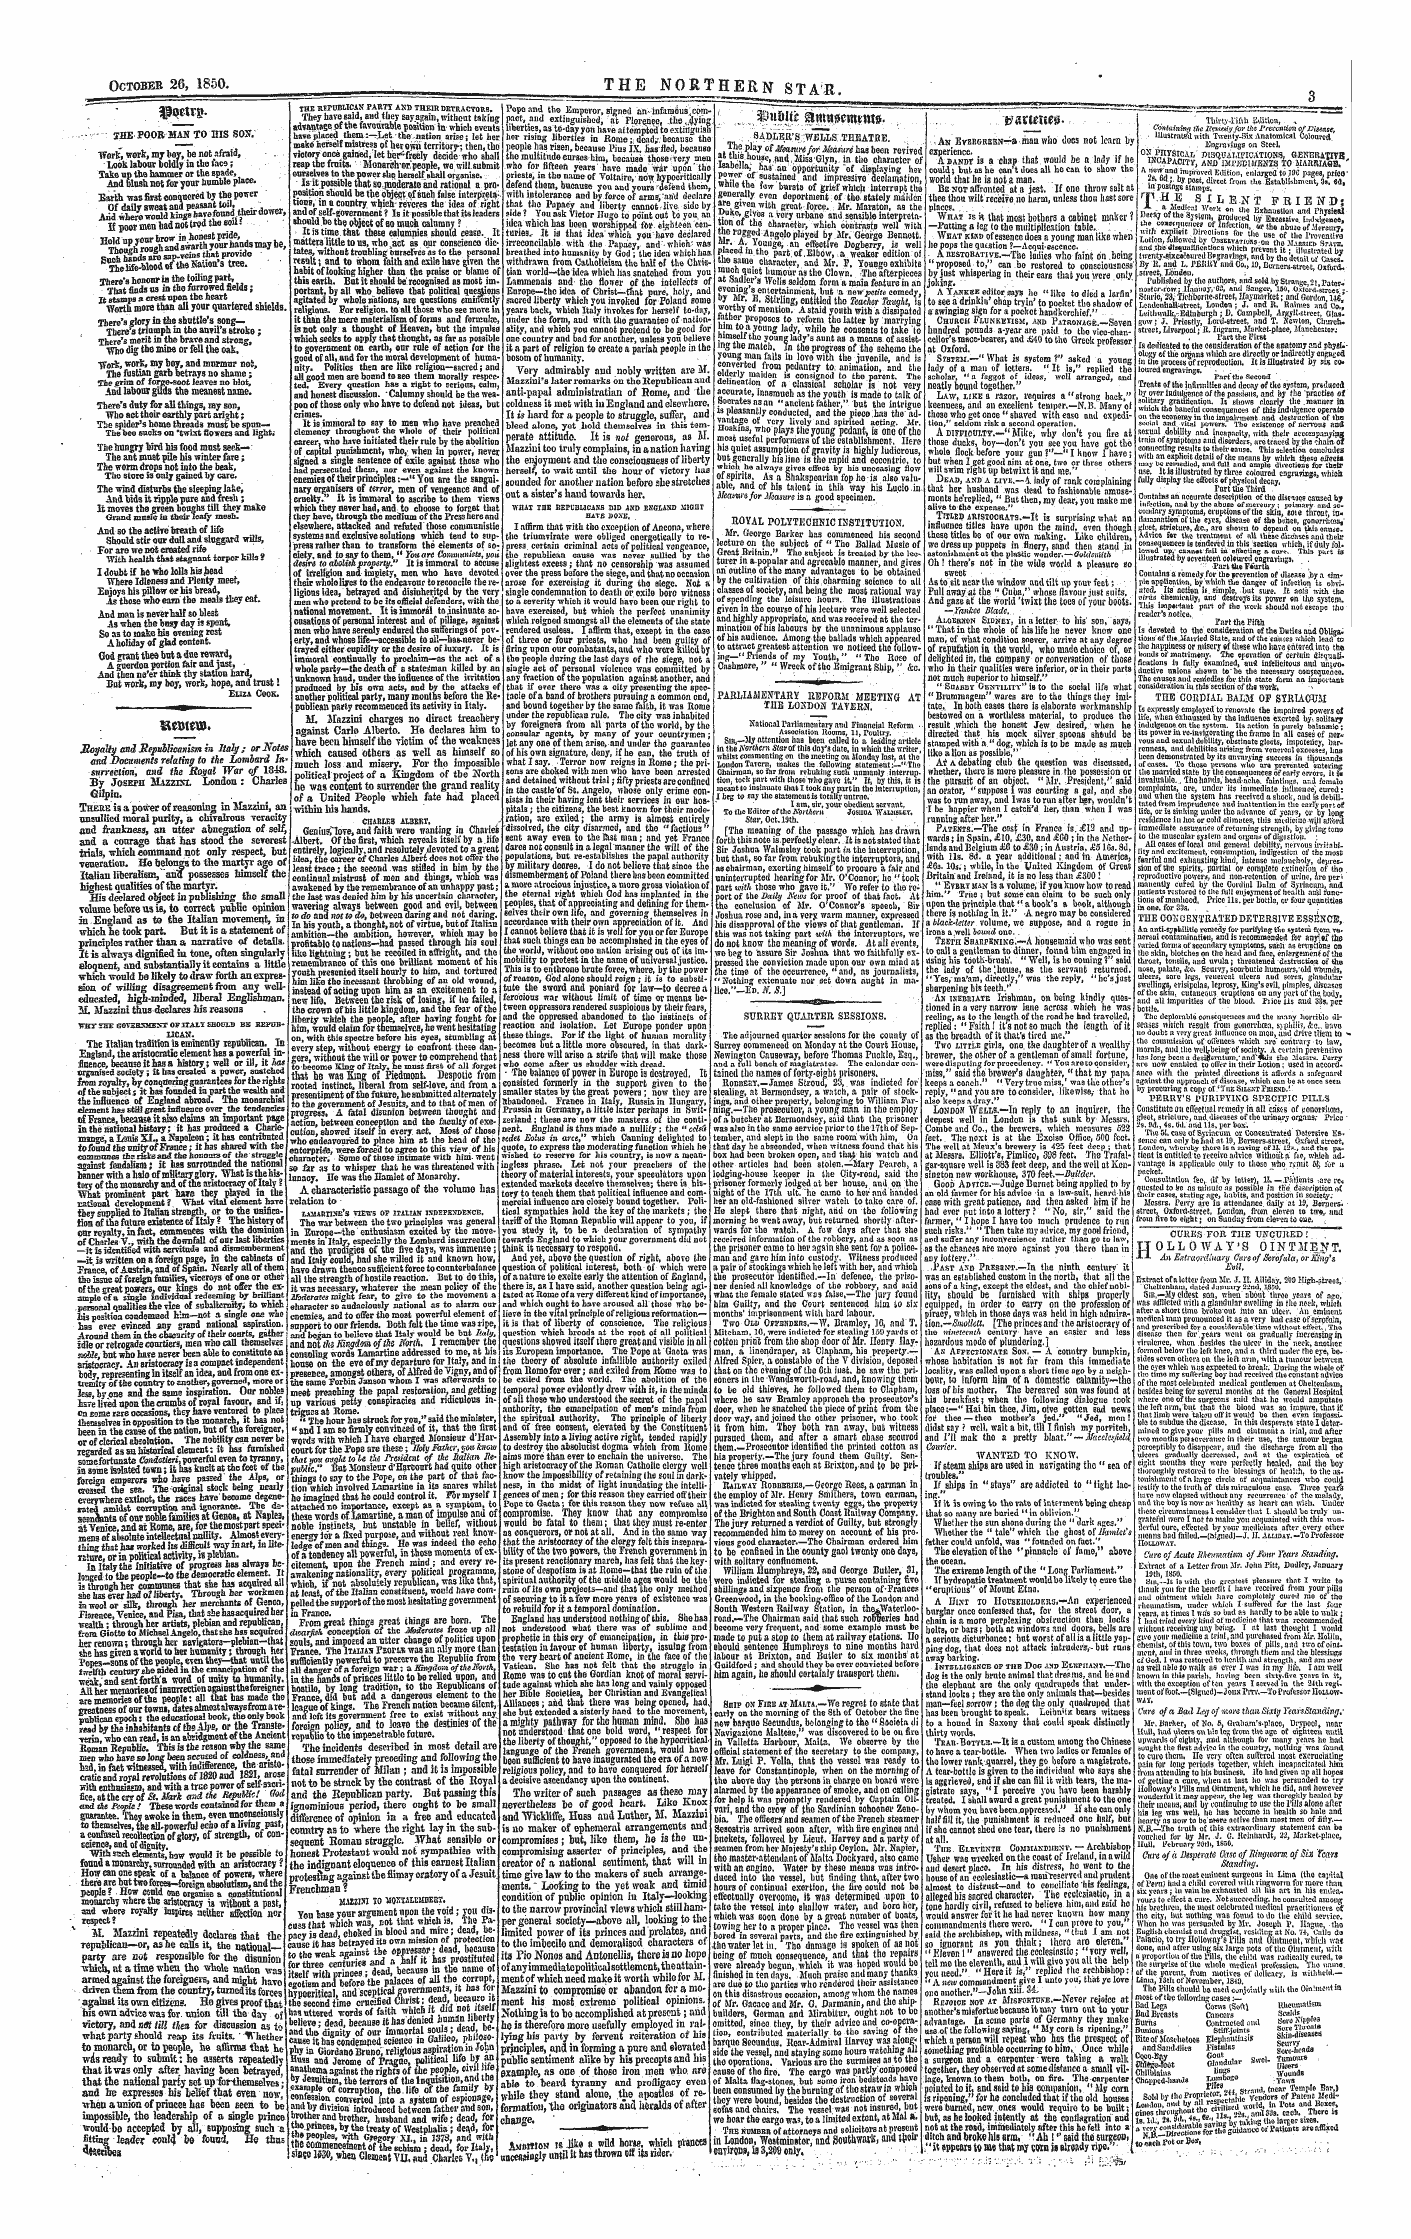 Northern Star (1837-1852): jS F Y, 1st edition - Uewew*